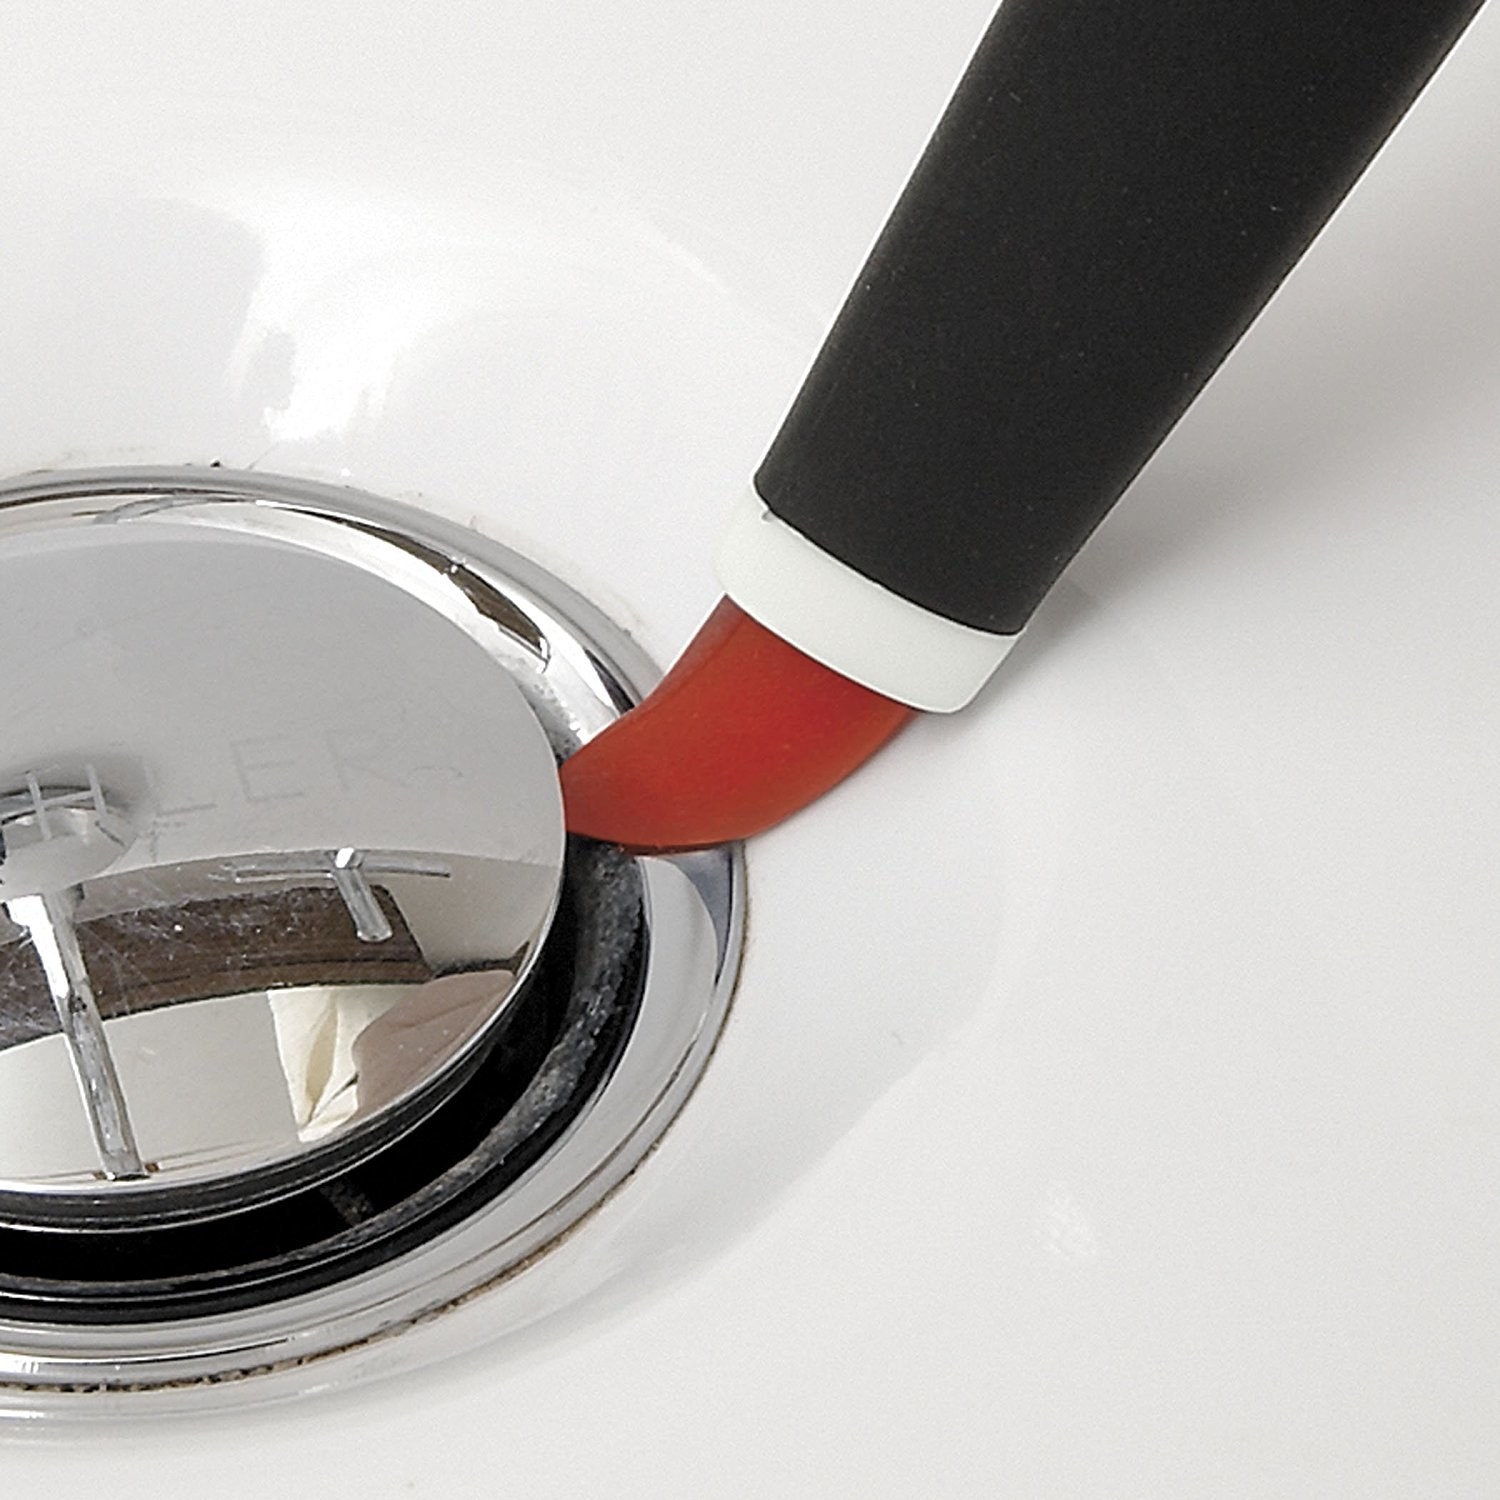 detail cleaner brush erasing grime around a sink drain